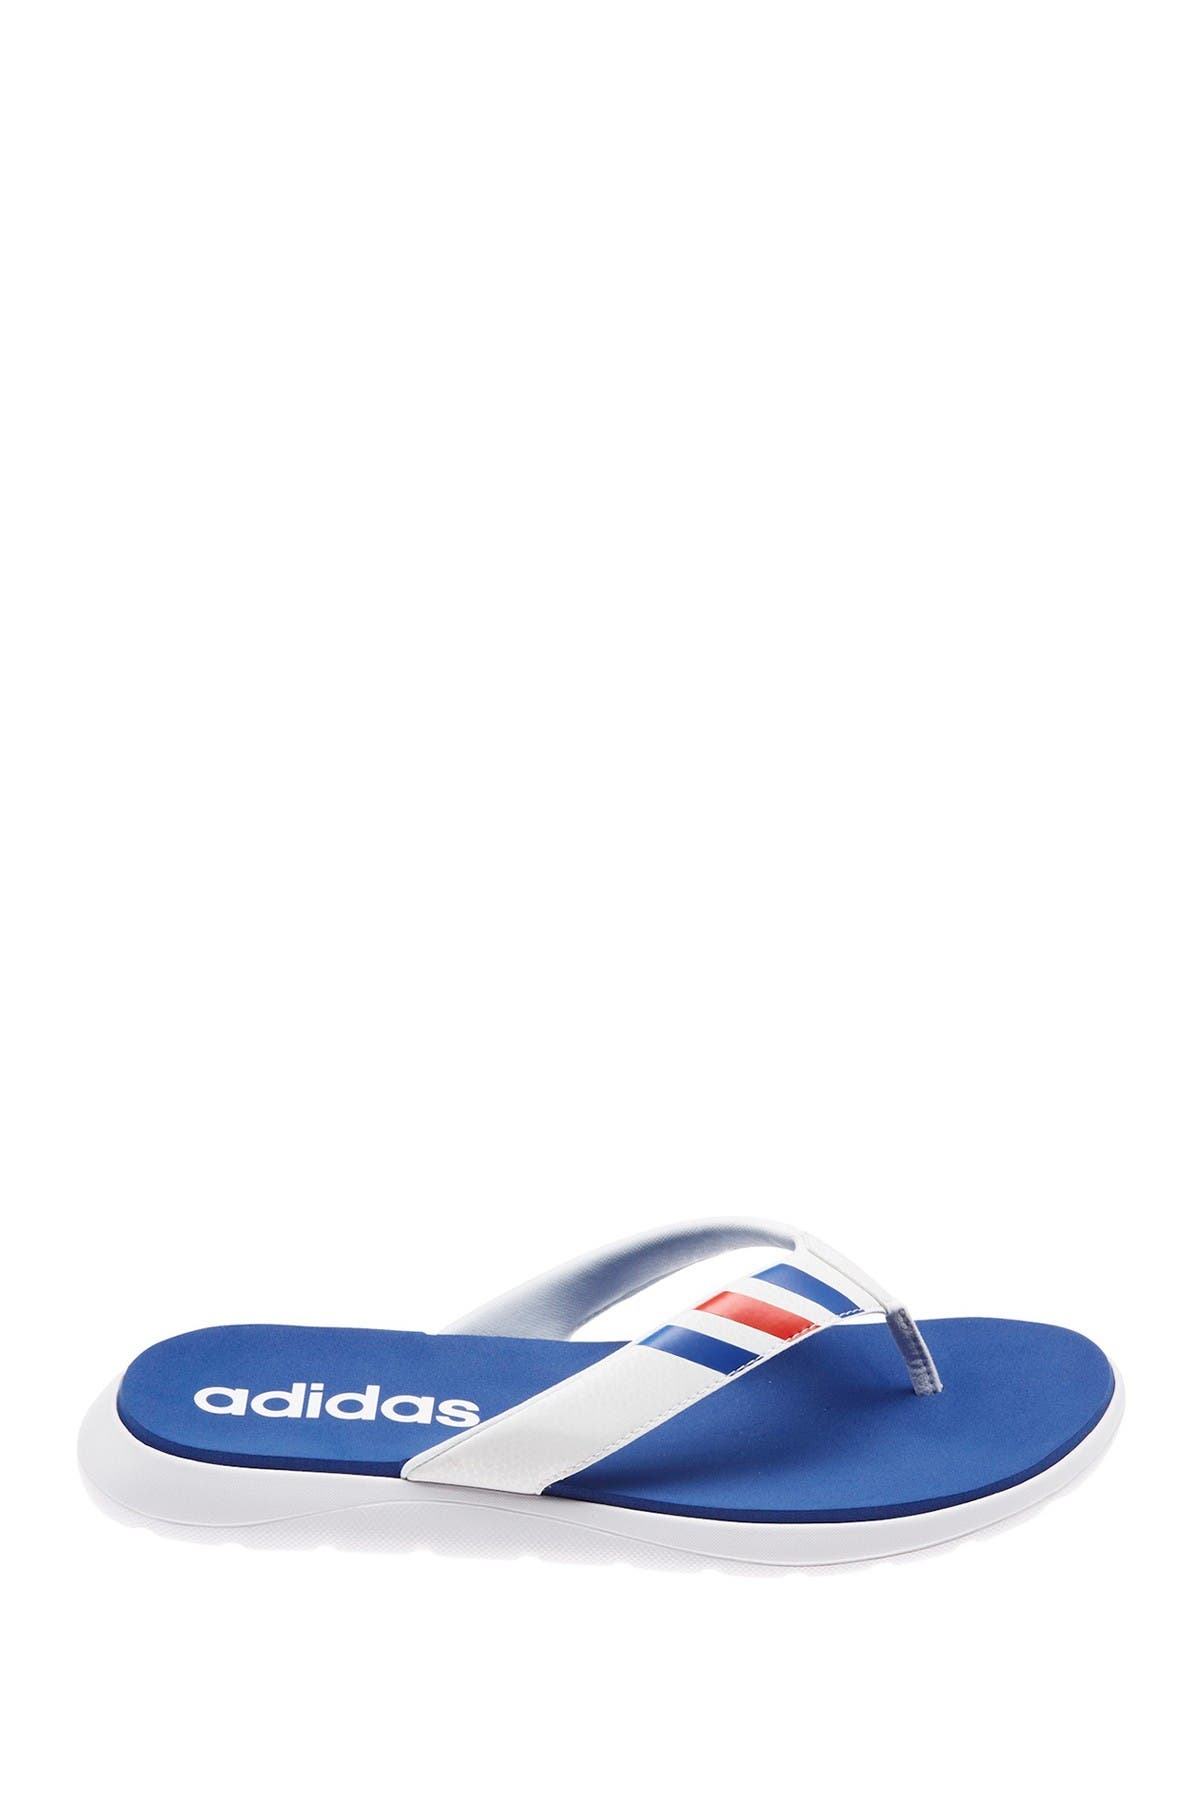 Adidas Originals Comfort Flip Flop In Ftwwht/roy